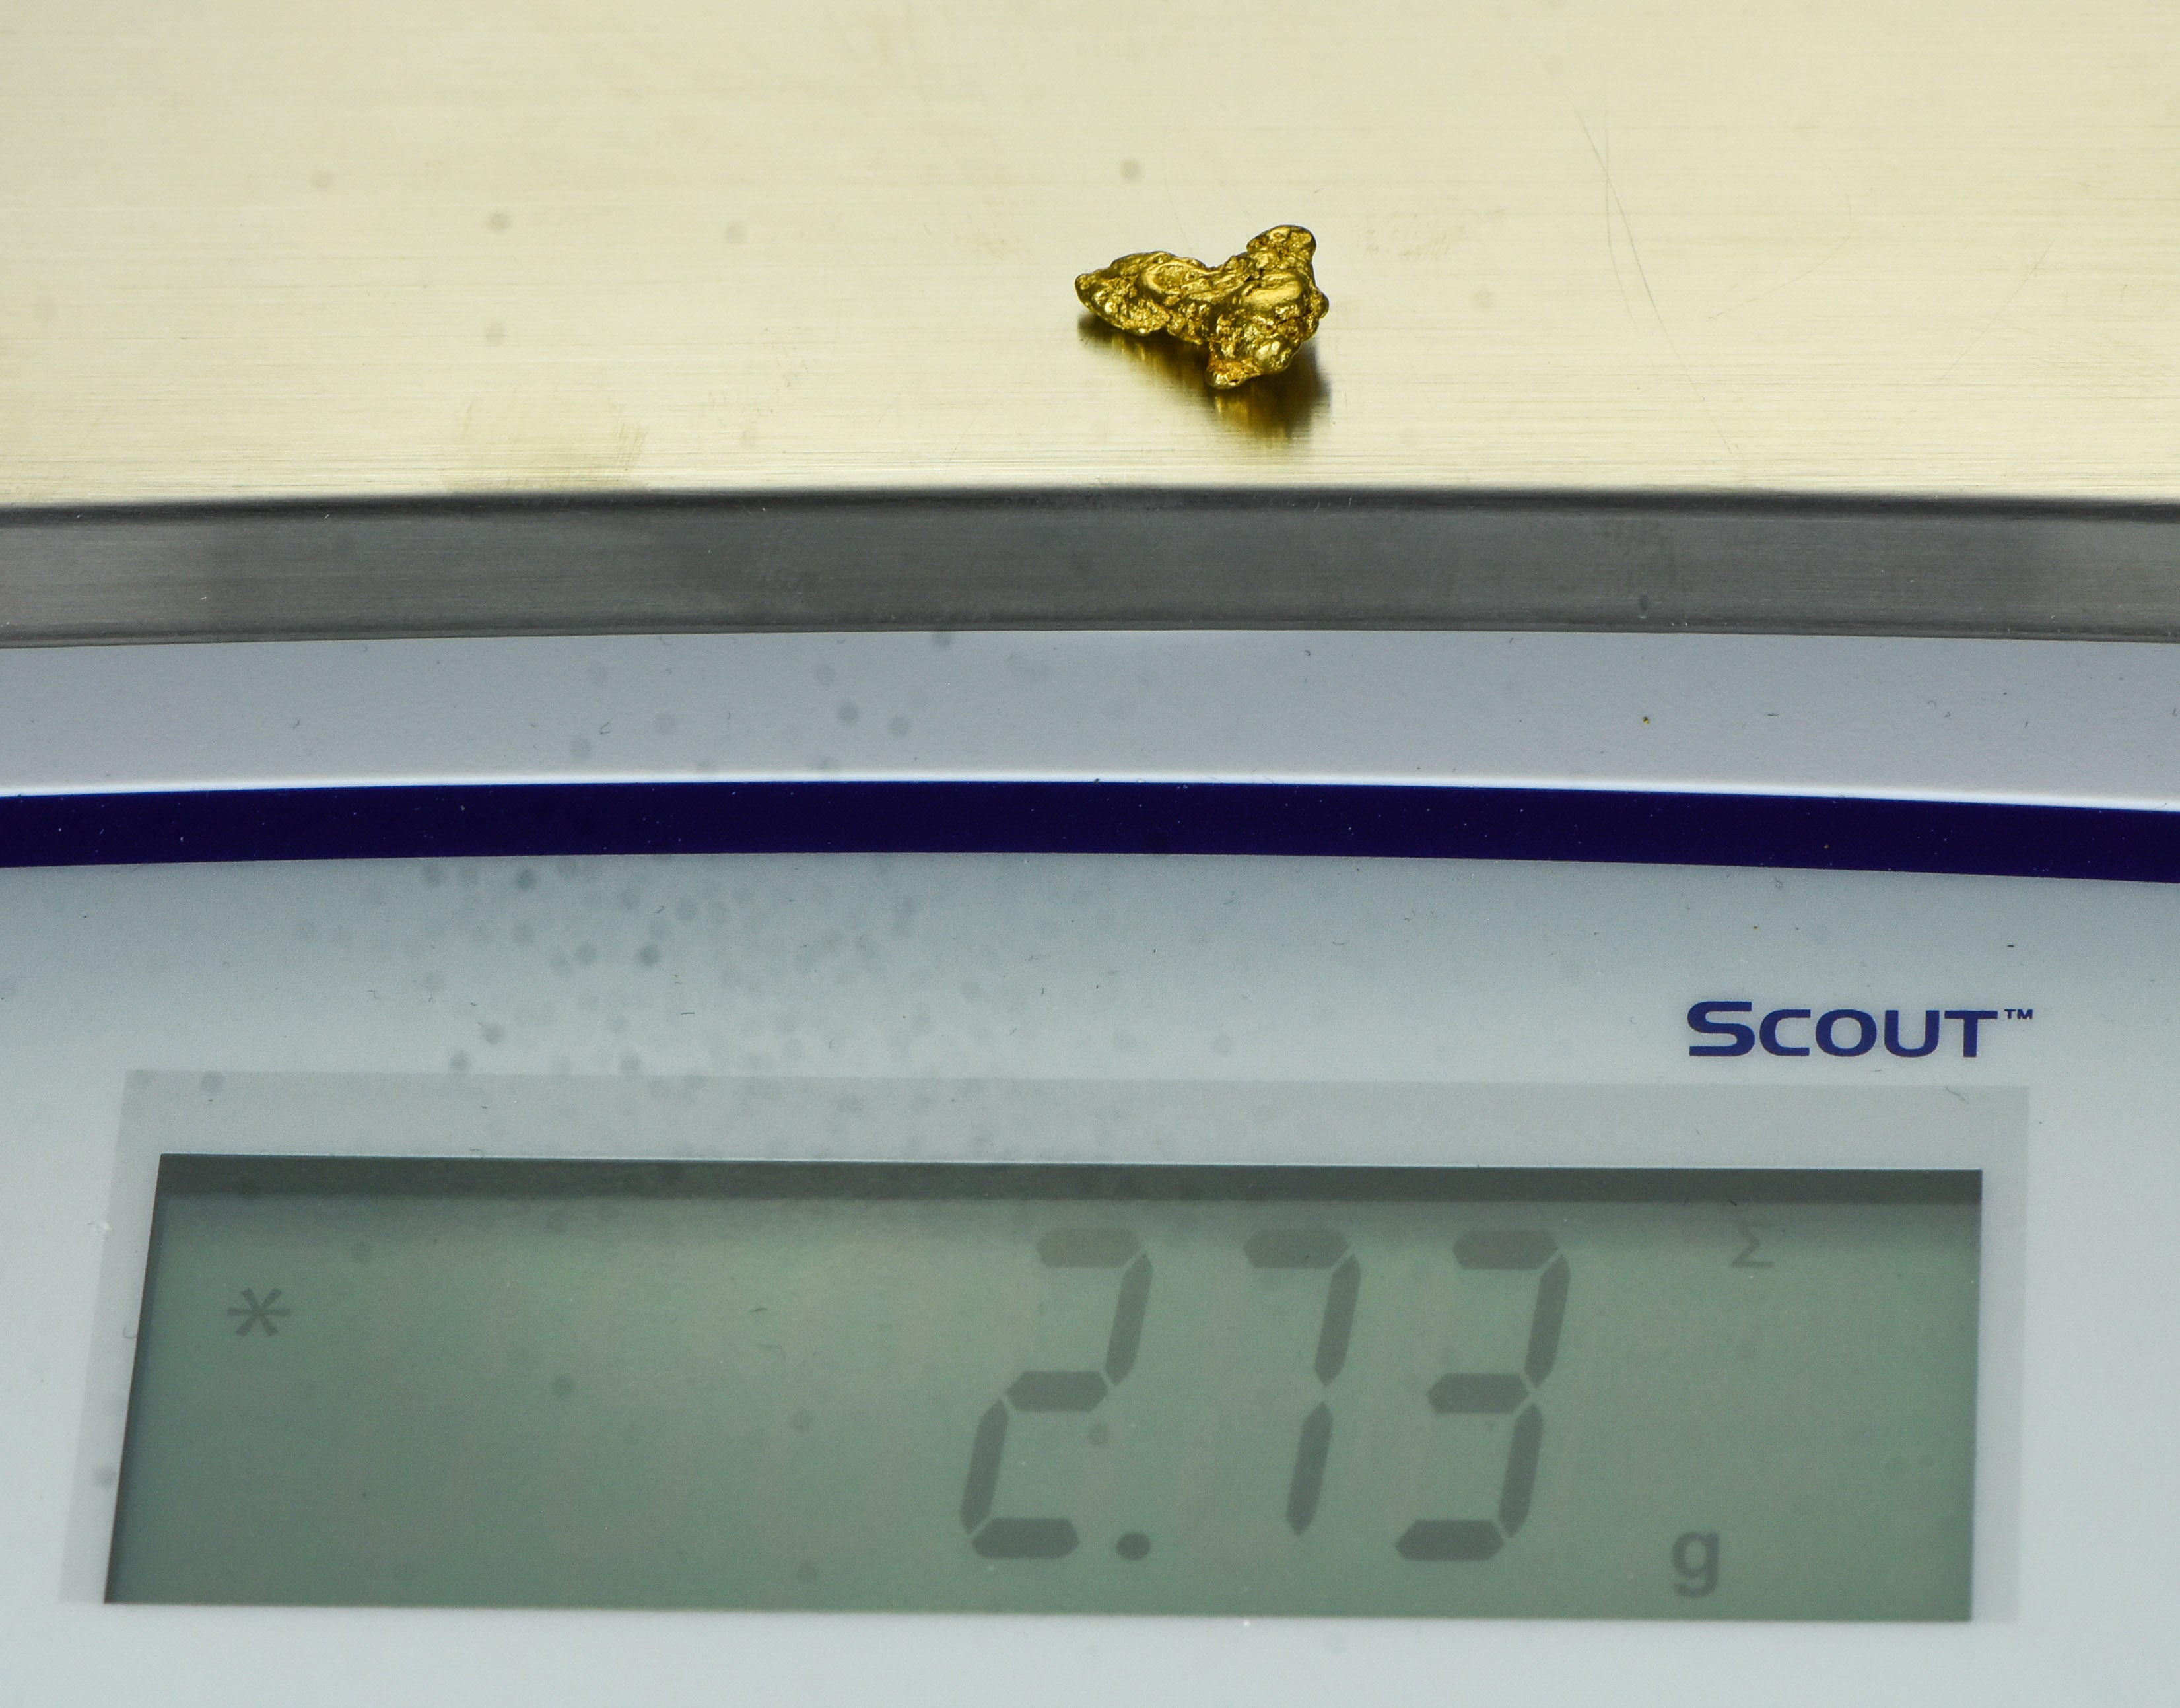 #906 Natural Gold Nugget Australian 2.73 Grams Genuine